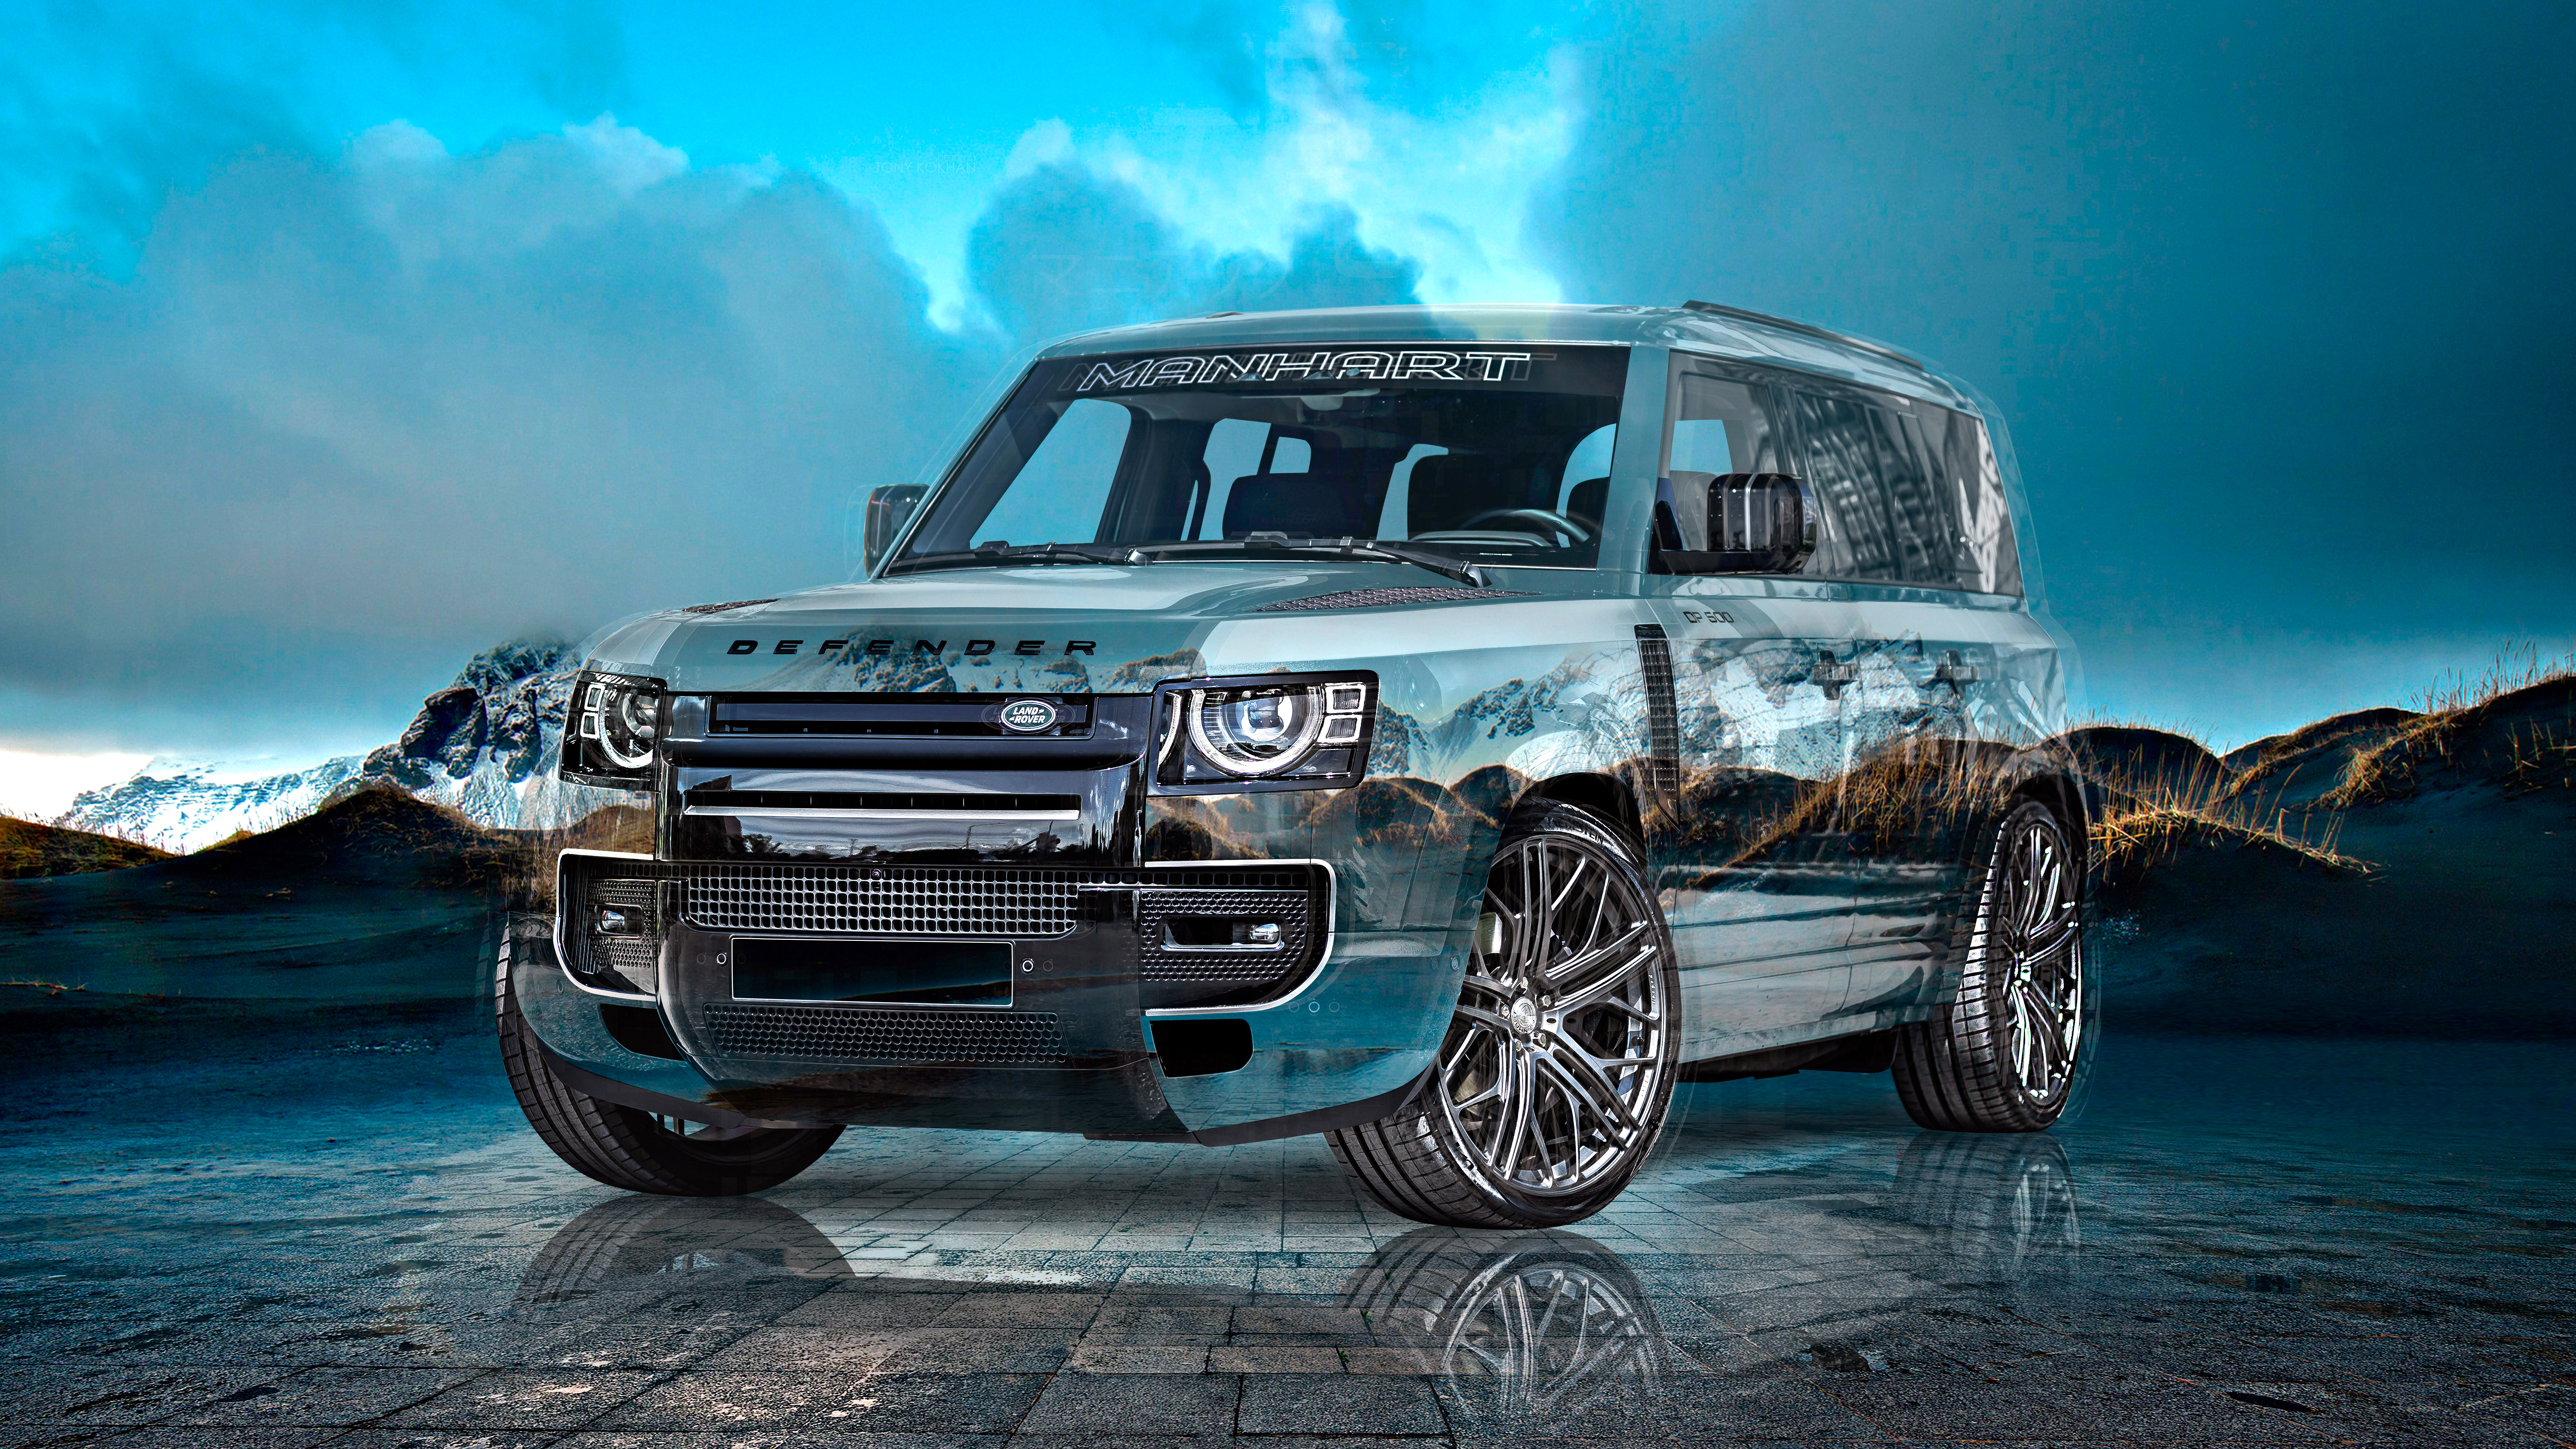 Land-Rover-Defender-Manhart-Super-Crystal-Maniac-Soul-Stokksnes-Island-Tactile-Hologram-Art-Car